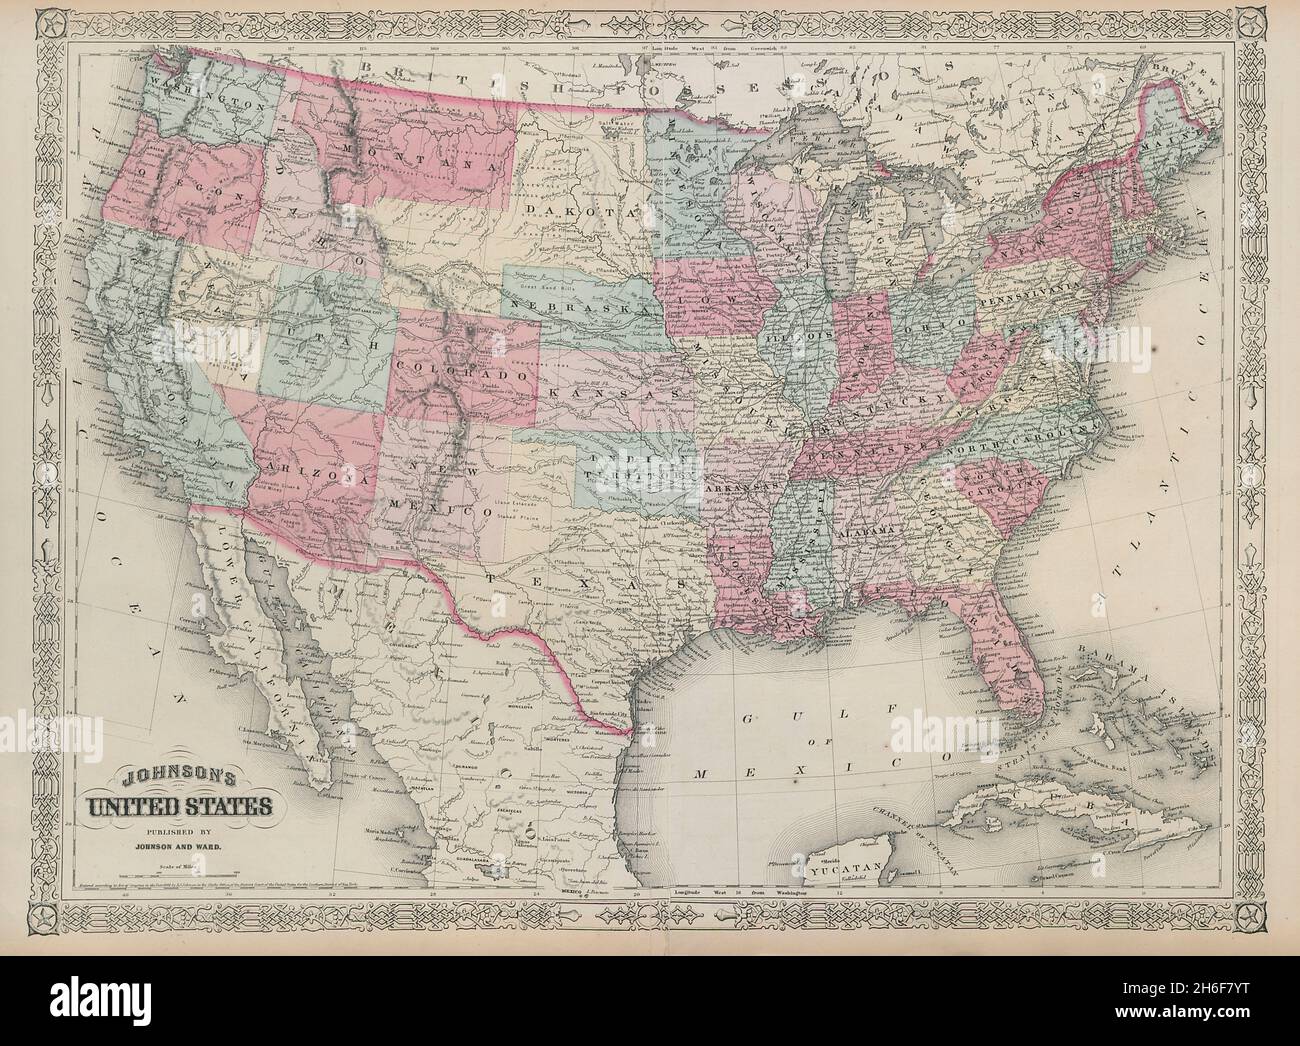 Johnson's United States. Wyoming part of Dakota Territory 1865 old antique map Stock Photo